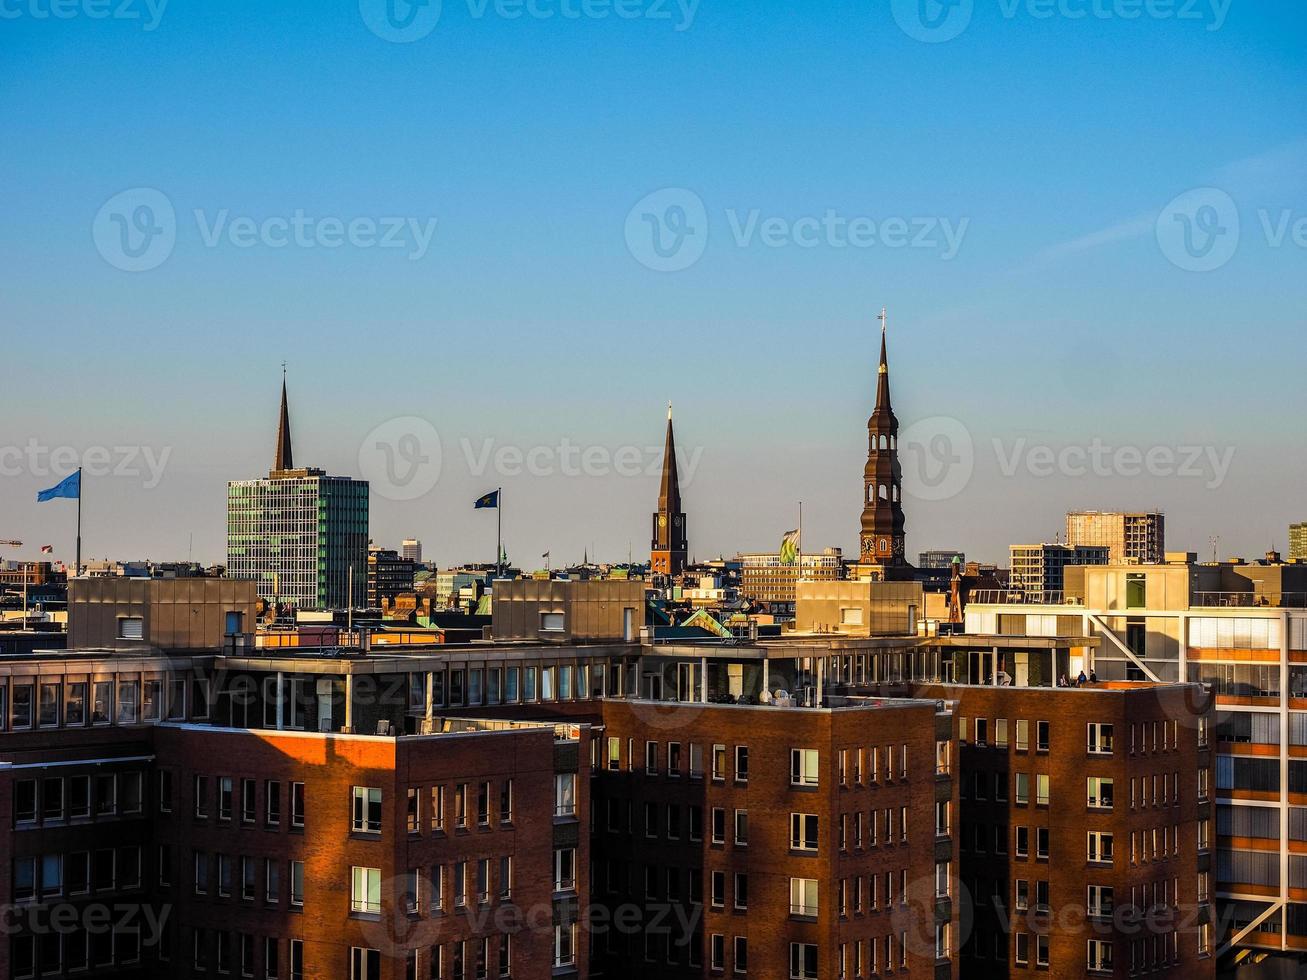 HDR Hamburg skyline view photo